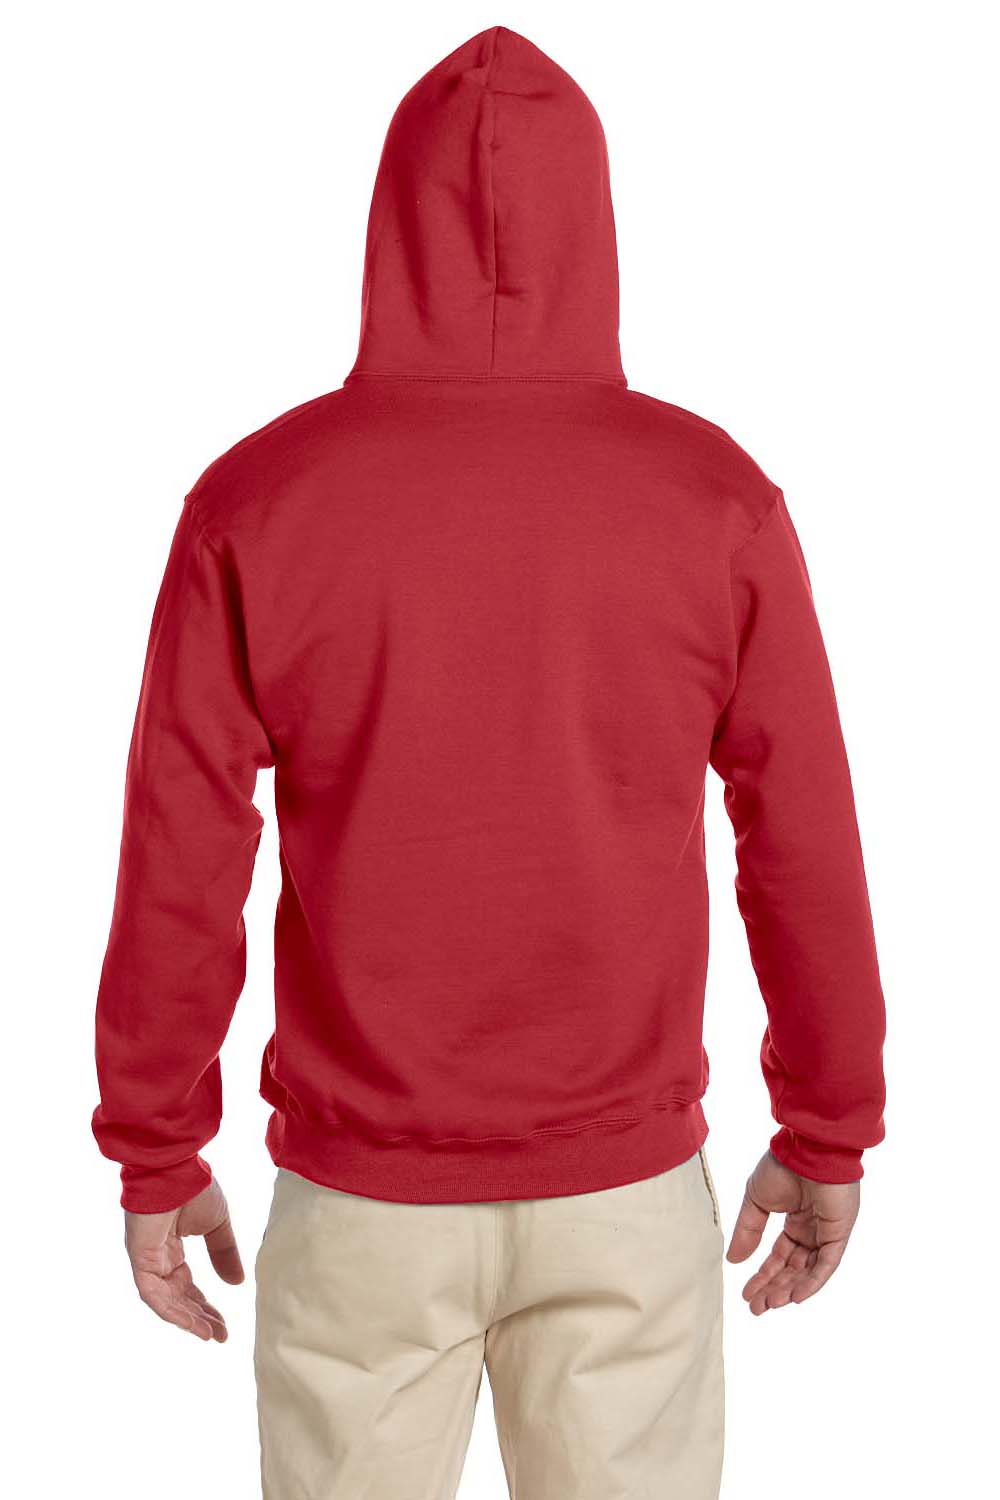 Jerzees 4997 Mens Super Sweats NuBlend Fleece Hooded Sweatshirt Hoodie Red Back